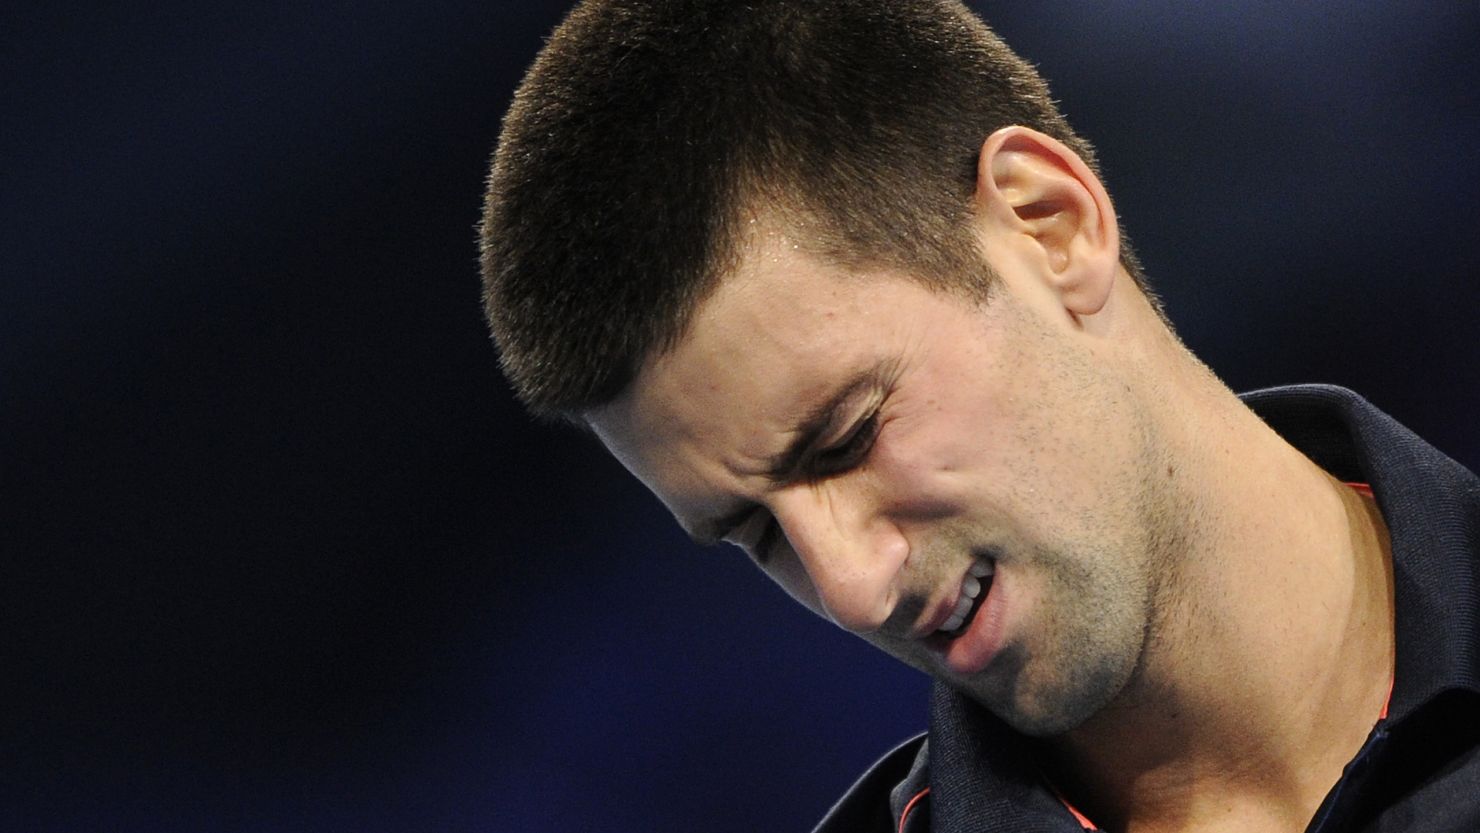 Serbian tennis star Novak Djokovic grimaces during Saturday's defeat by Kei Nishikori in Switzerland.